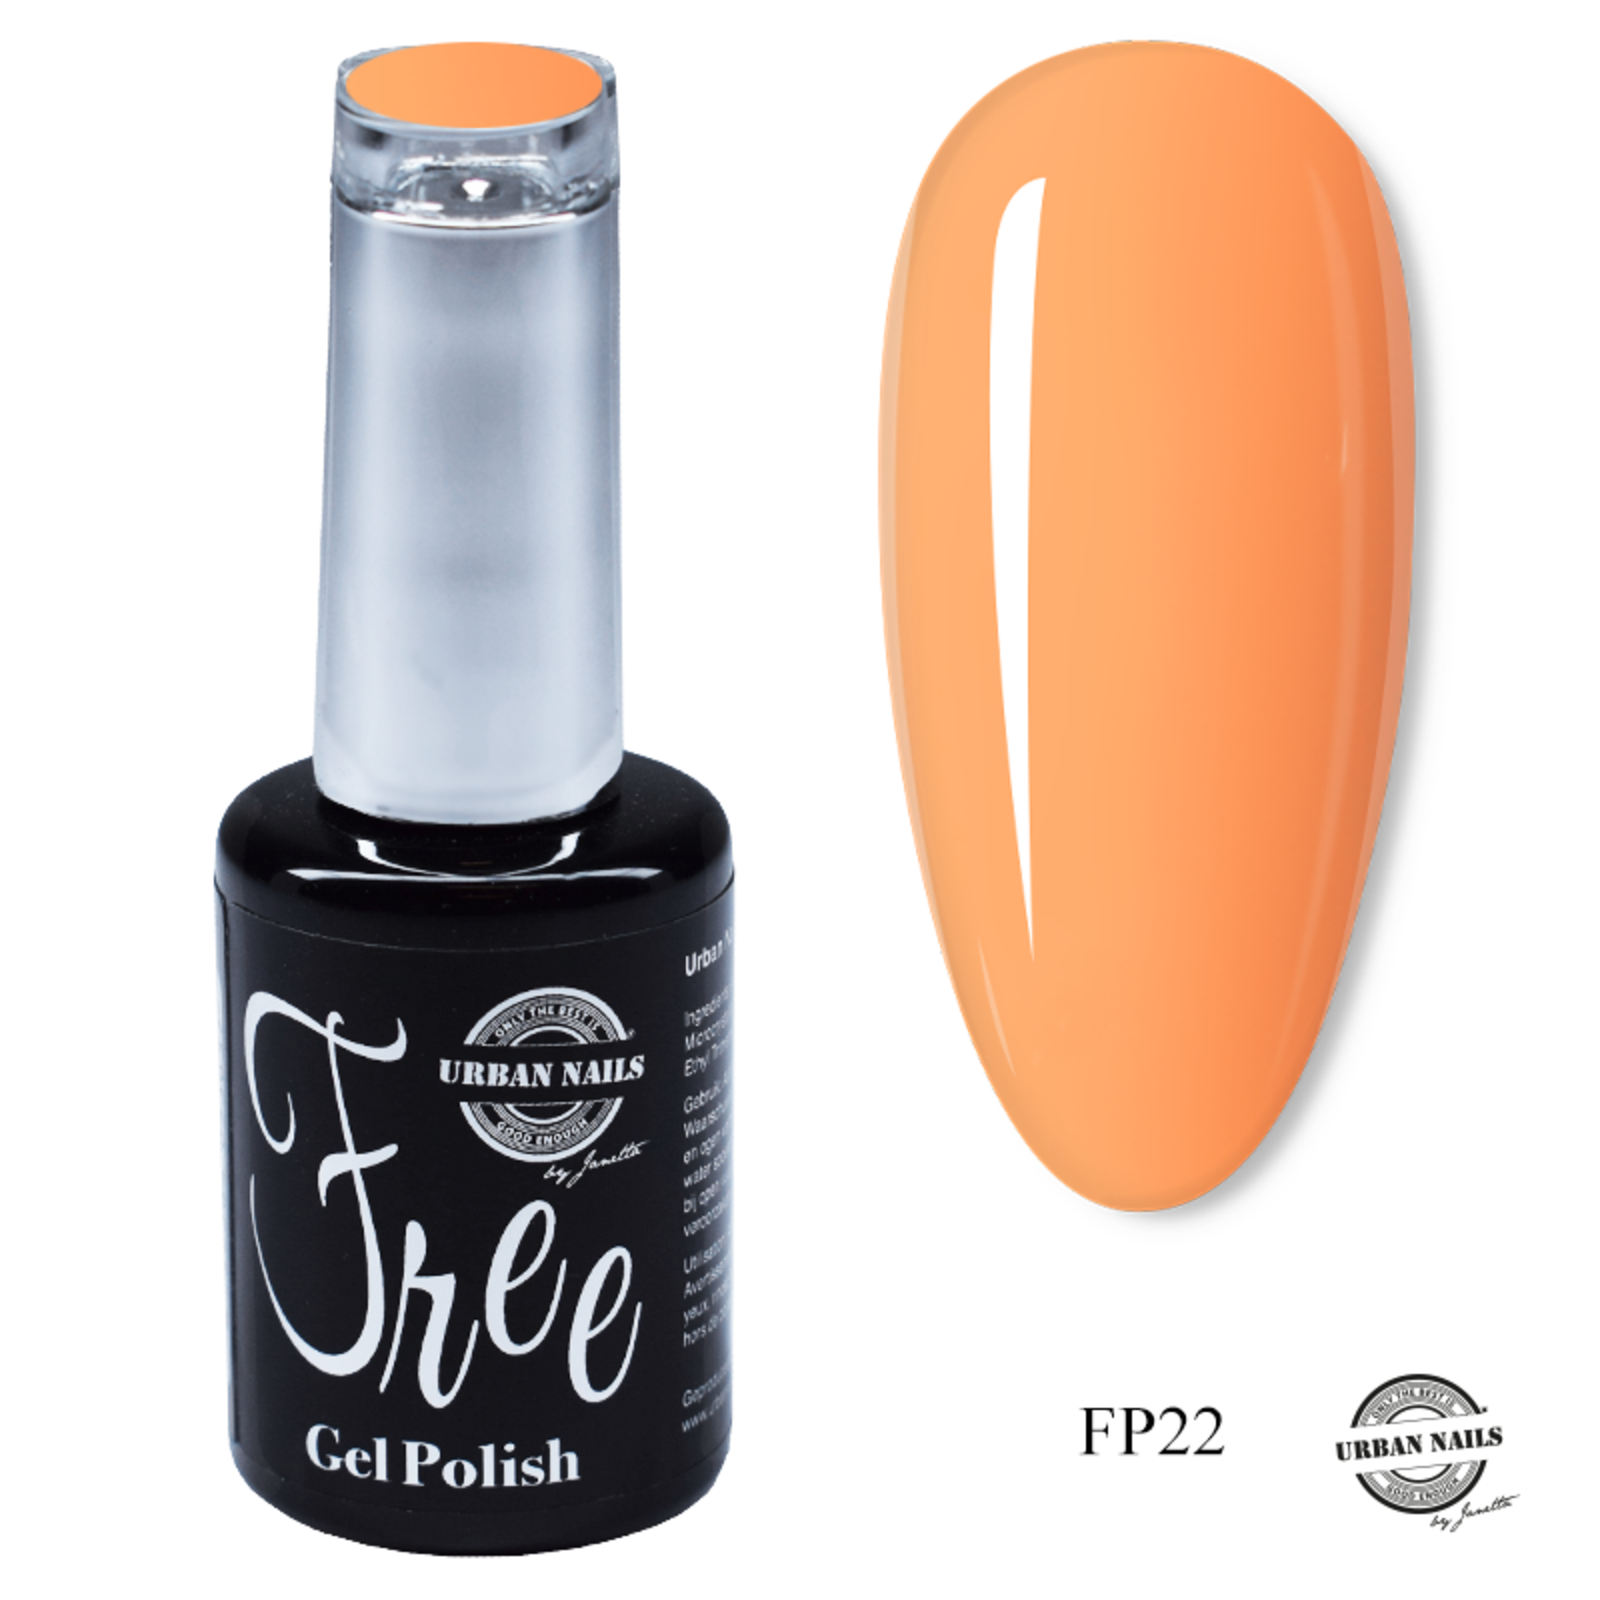 Urban nails Free Gelpolish FP22